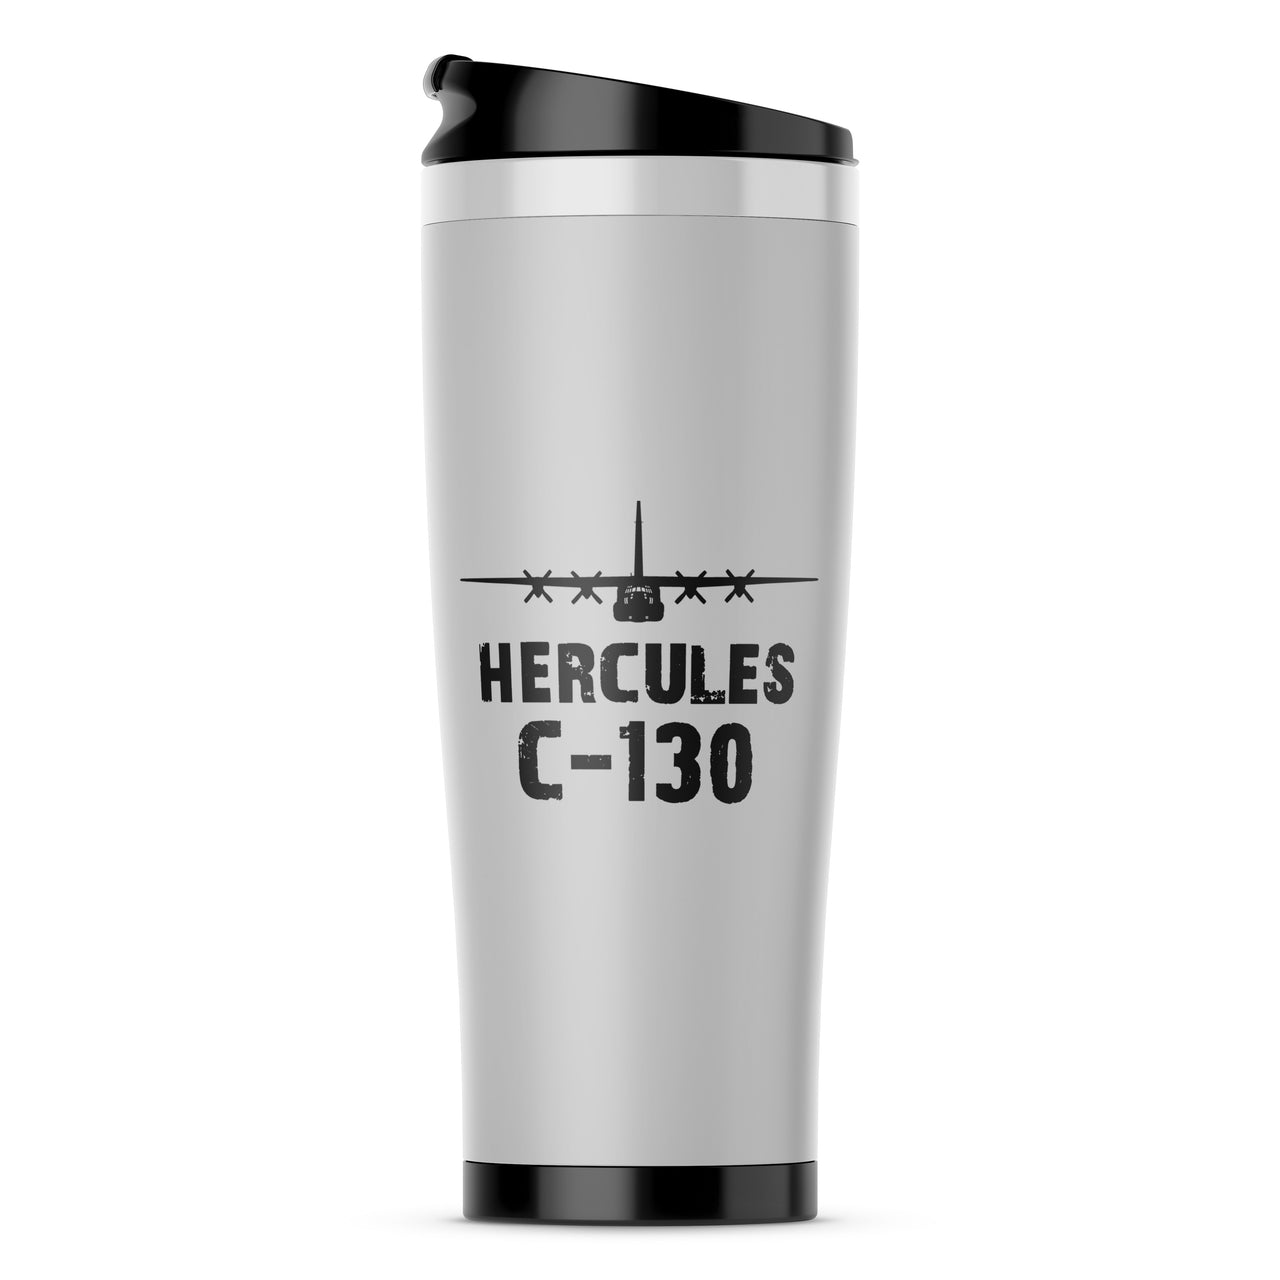 Hercules C-130 & Plane Designed Travel Mugs